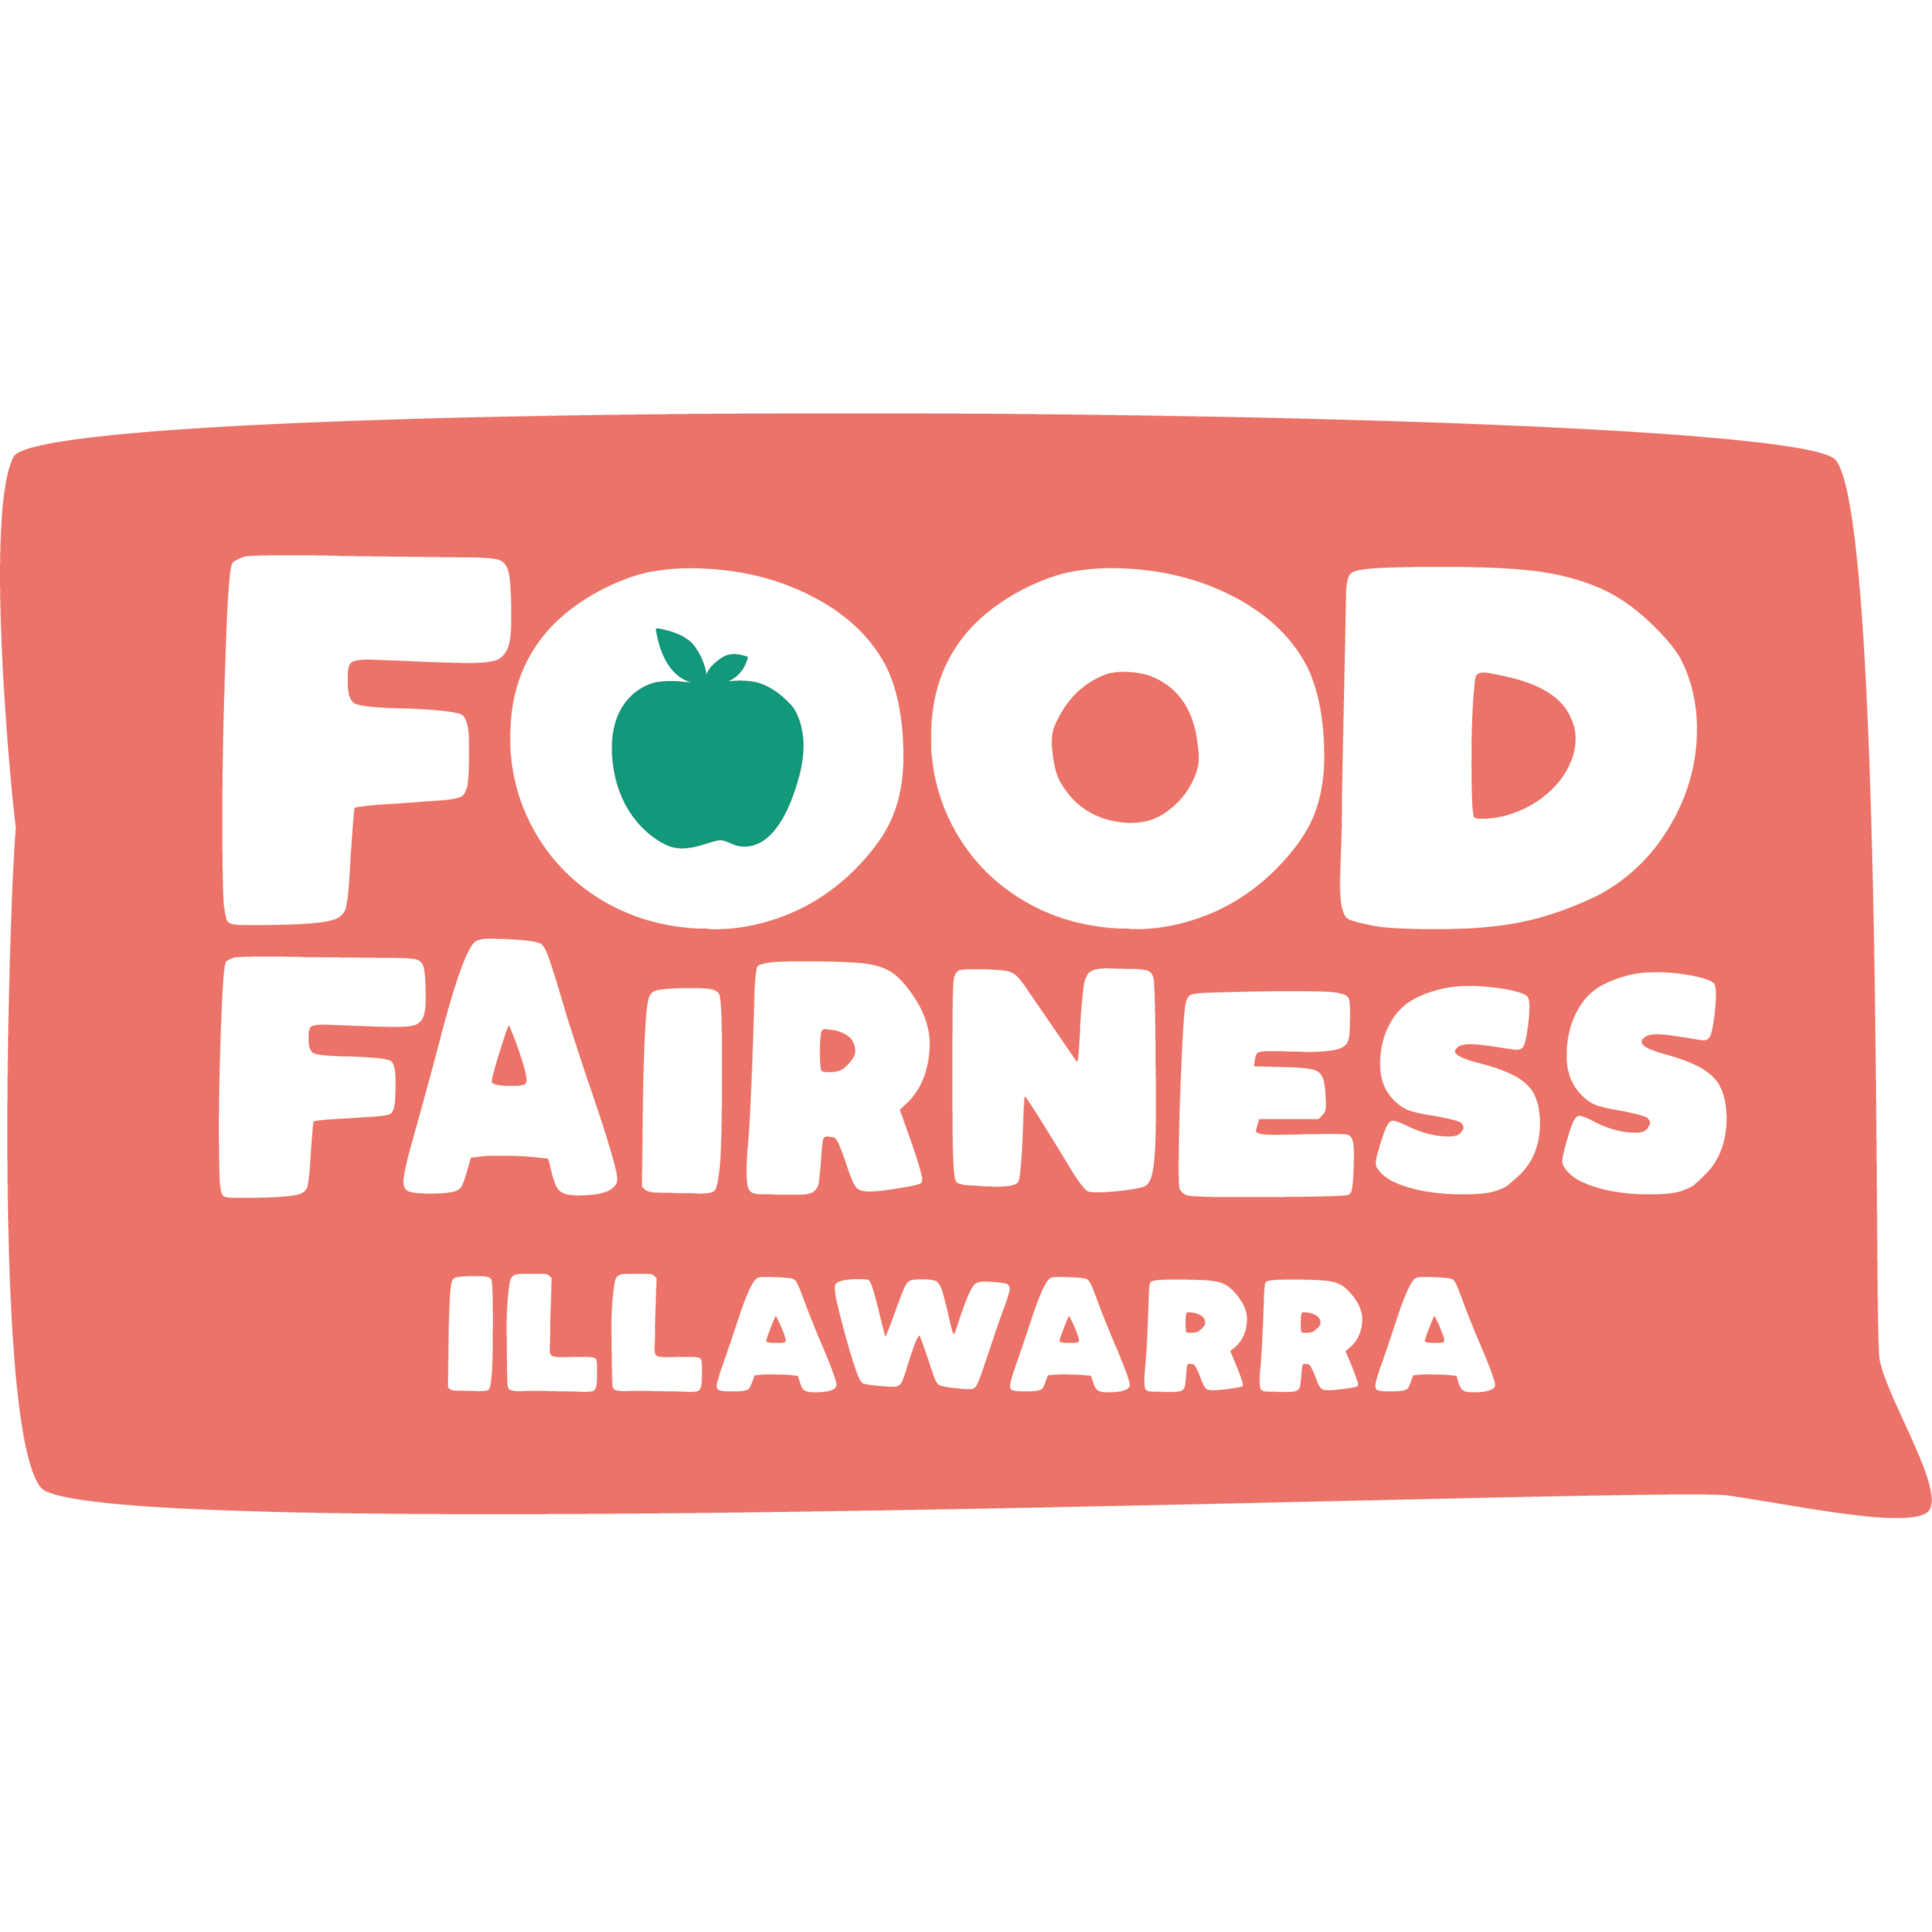 Food Fairness Illawarra